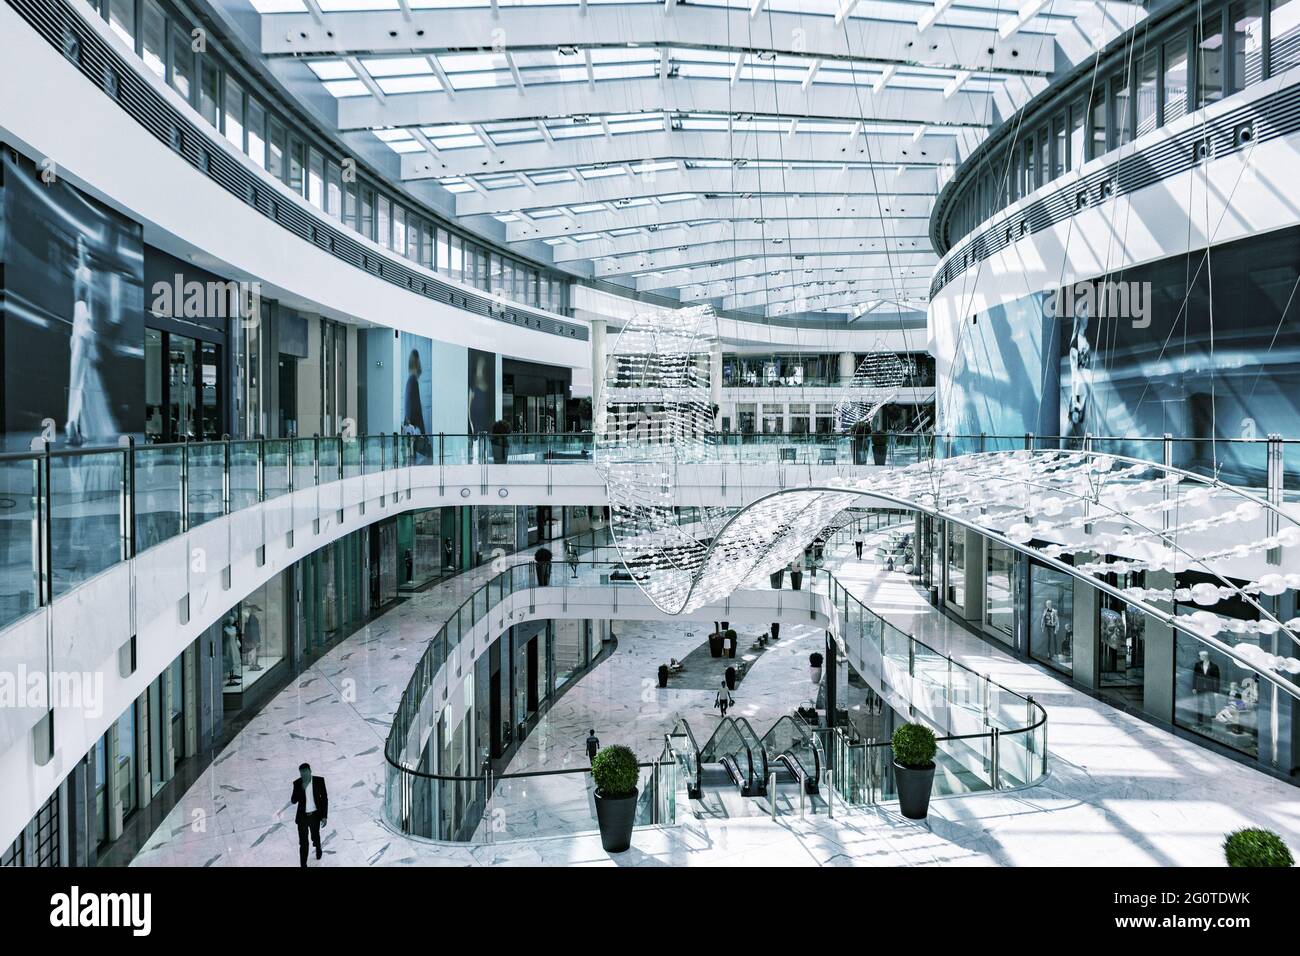 Interior of new extension to the Dubai Mall, the Fashion Avenue